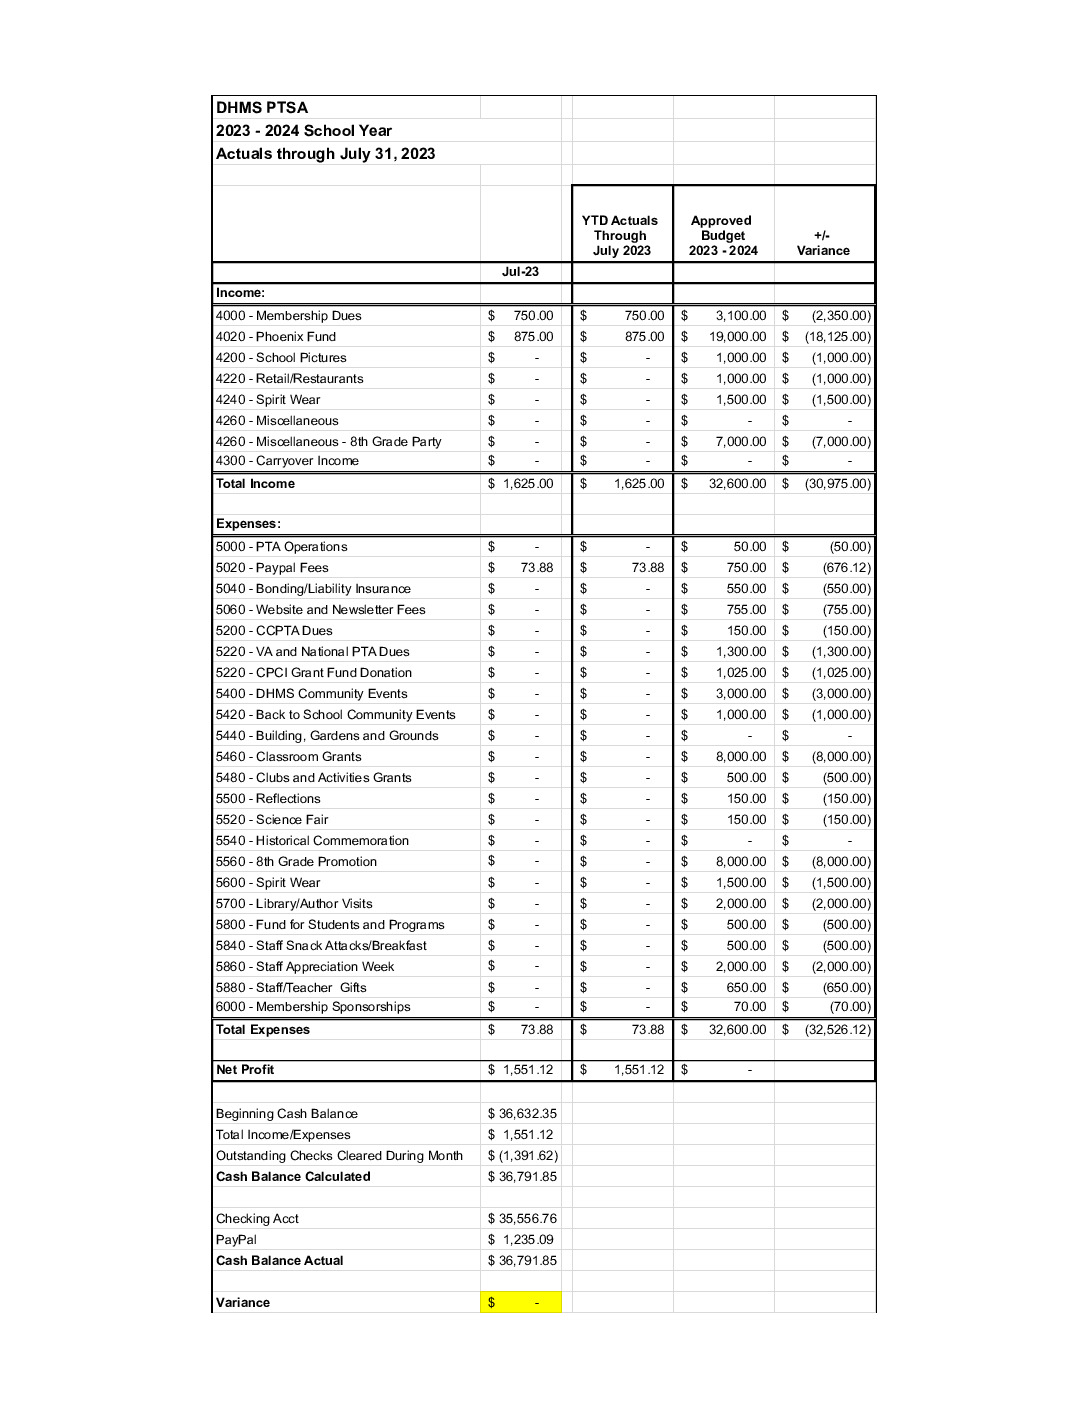 thumbnail of 202307_DHMS PTSA Budget Report July 2023